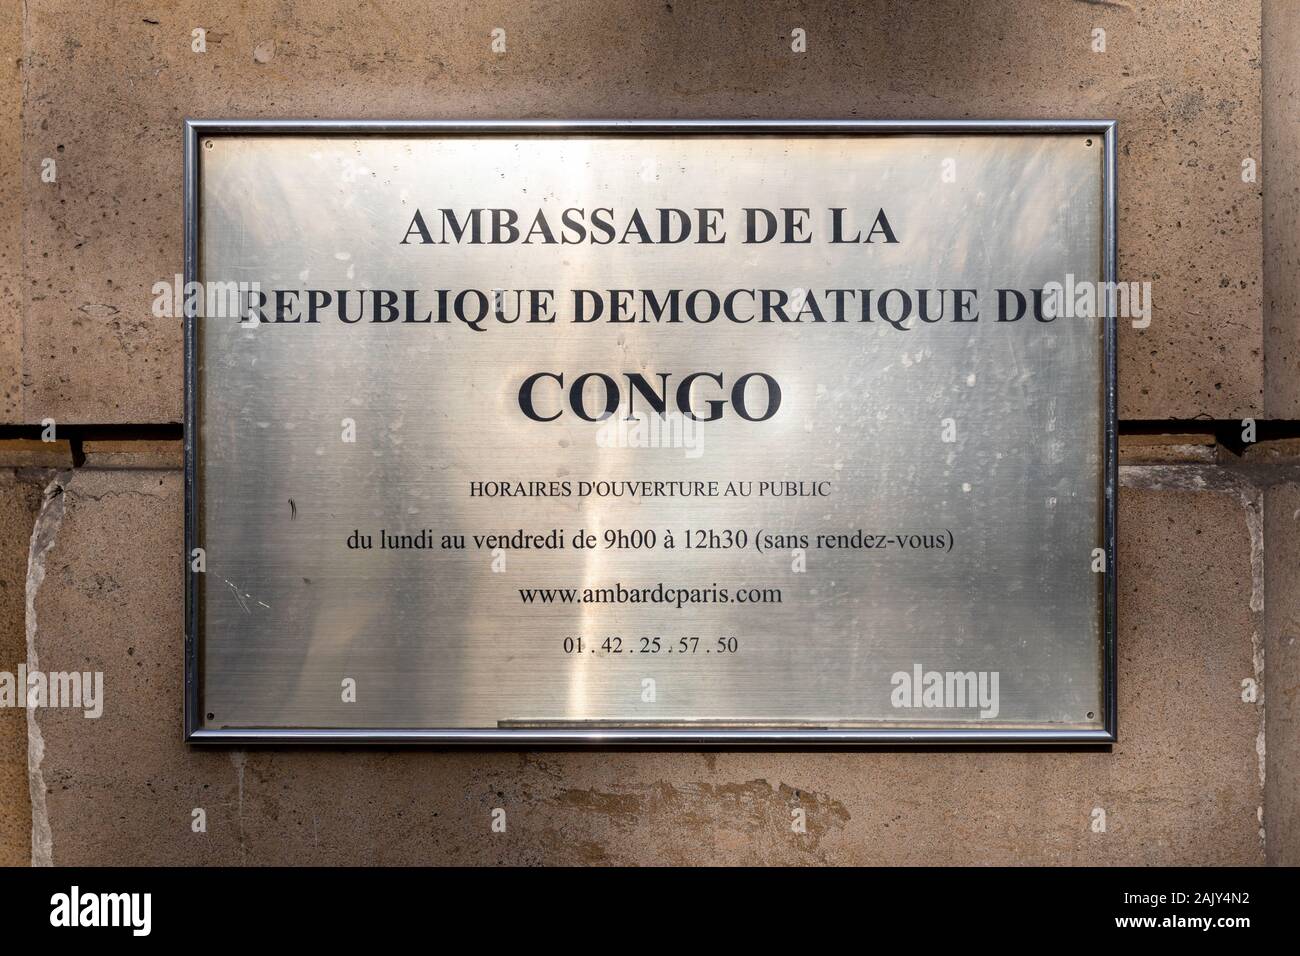 Ambassade de la République Démocratique du Congo (Embassy of the Democratic Republic of Congo), sign; Paris, France Stock Photo